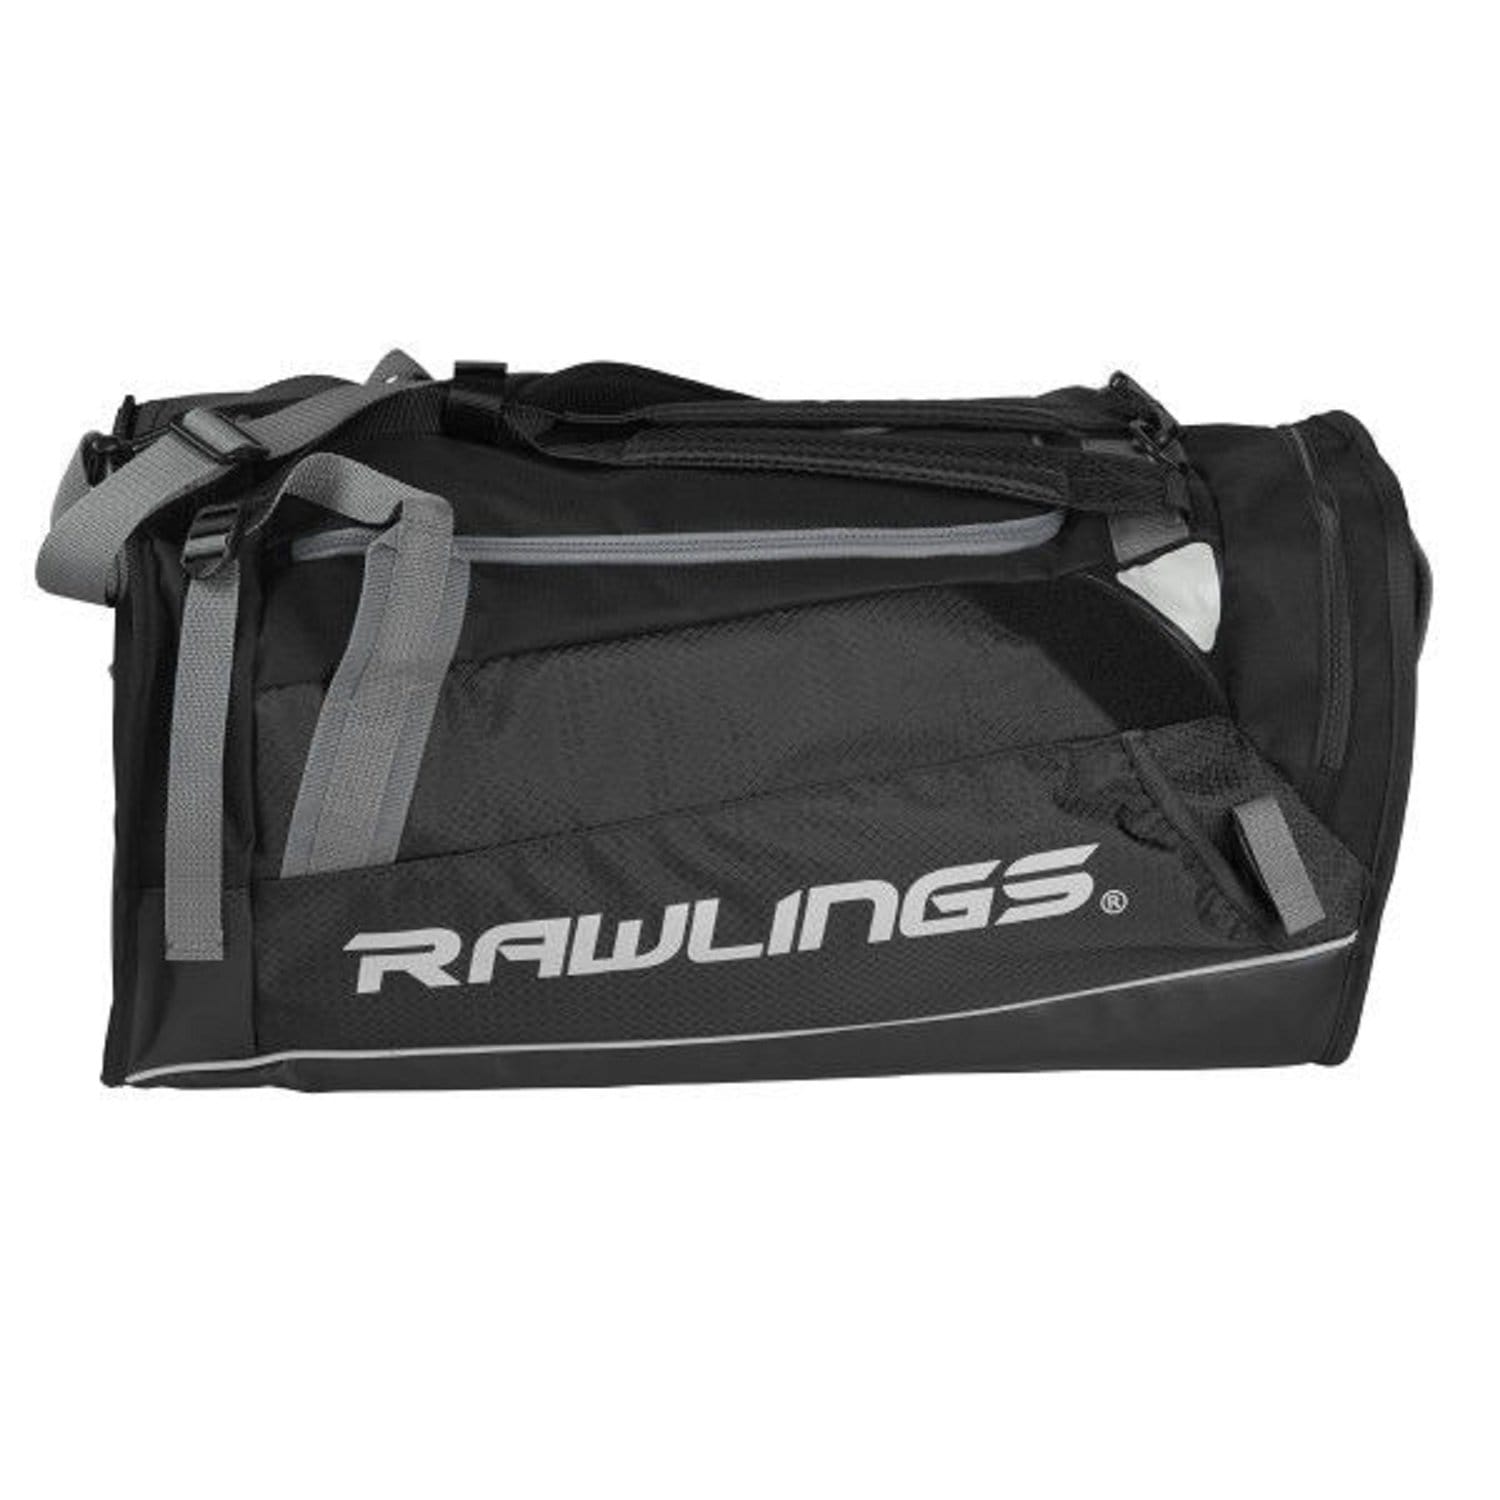 Rawlings Sports : Baseball Rawlings R601 Hybrid Backpack Duffel Players Bag - Black